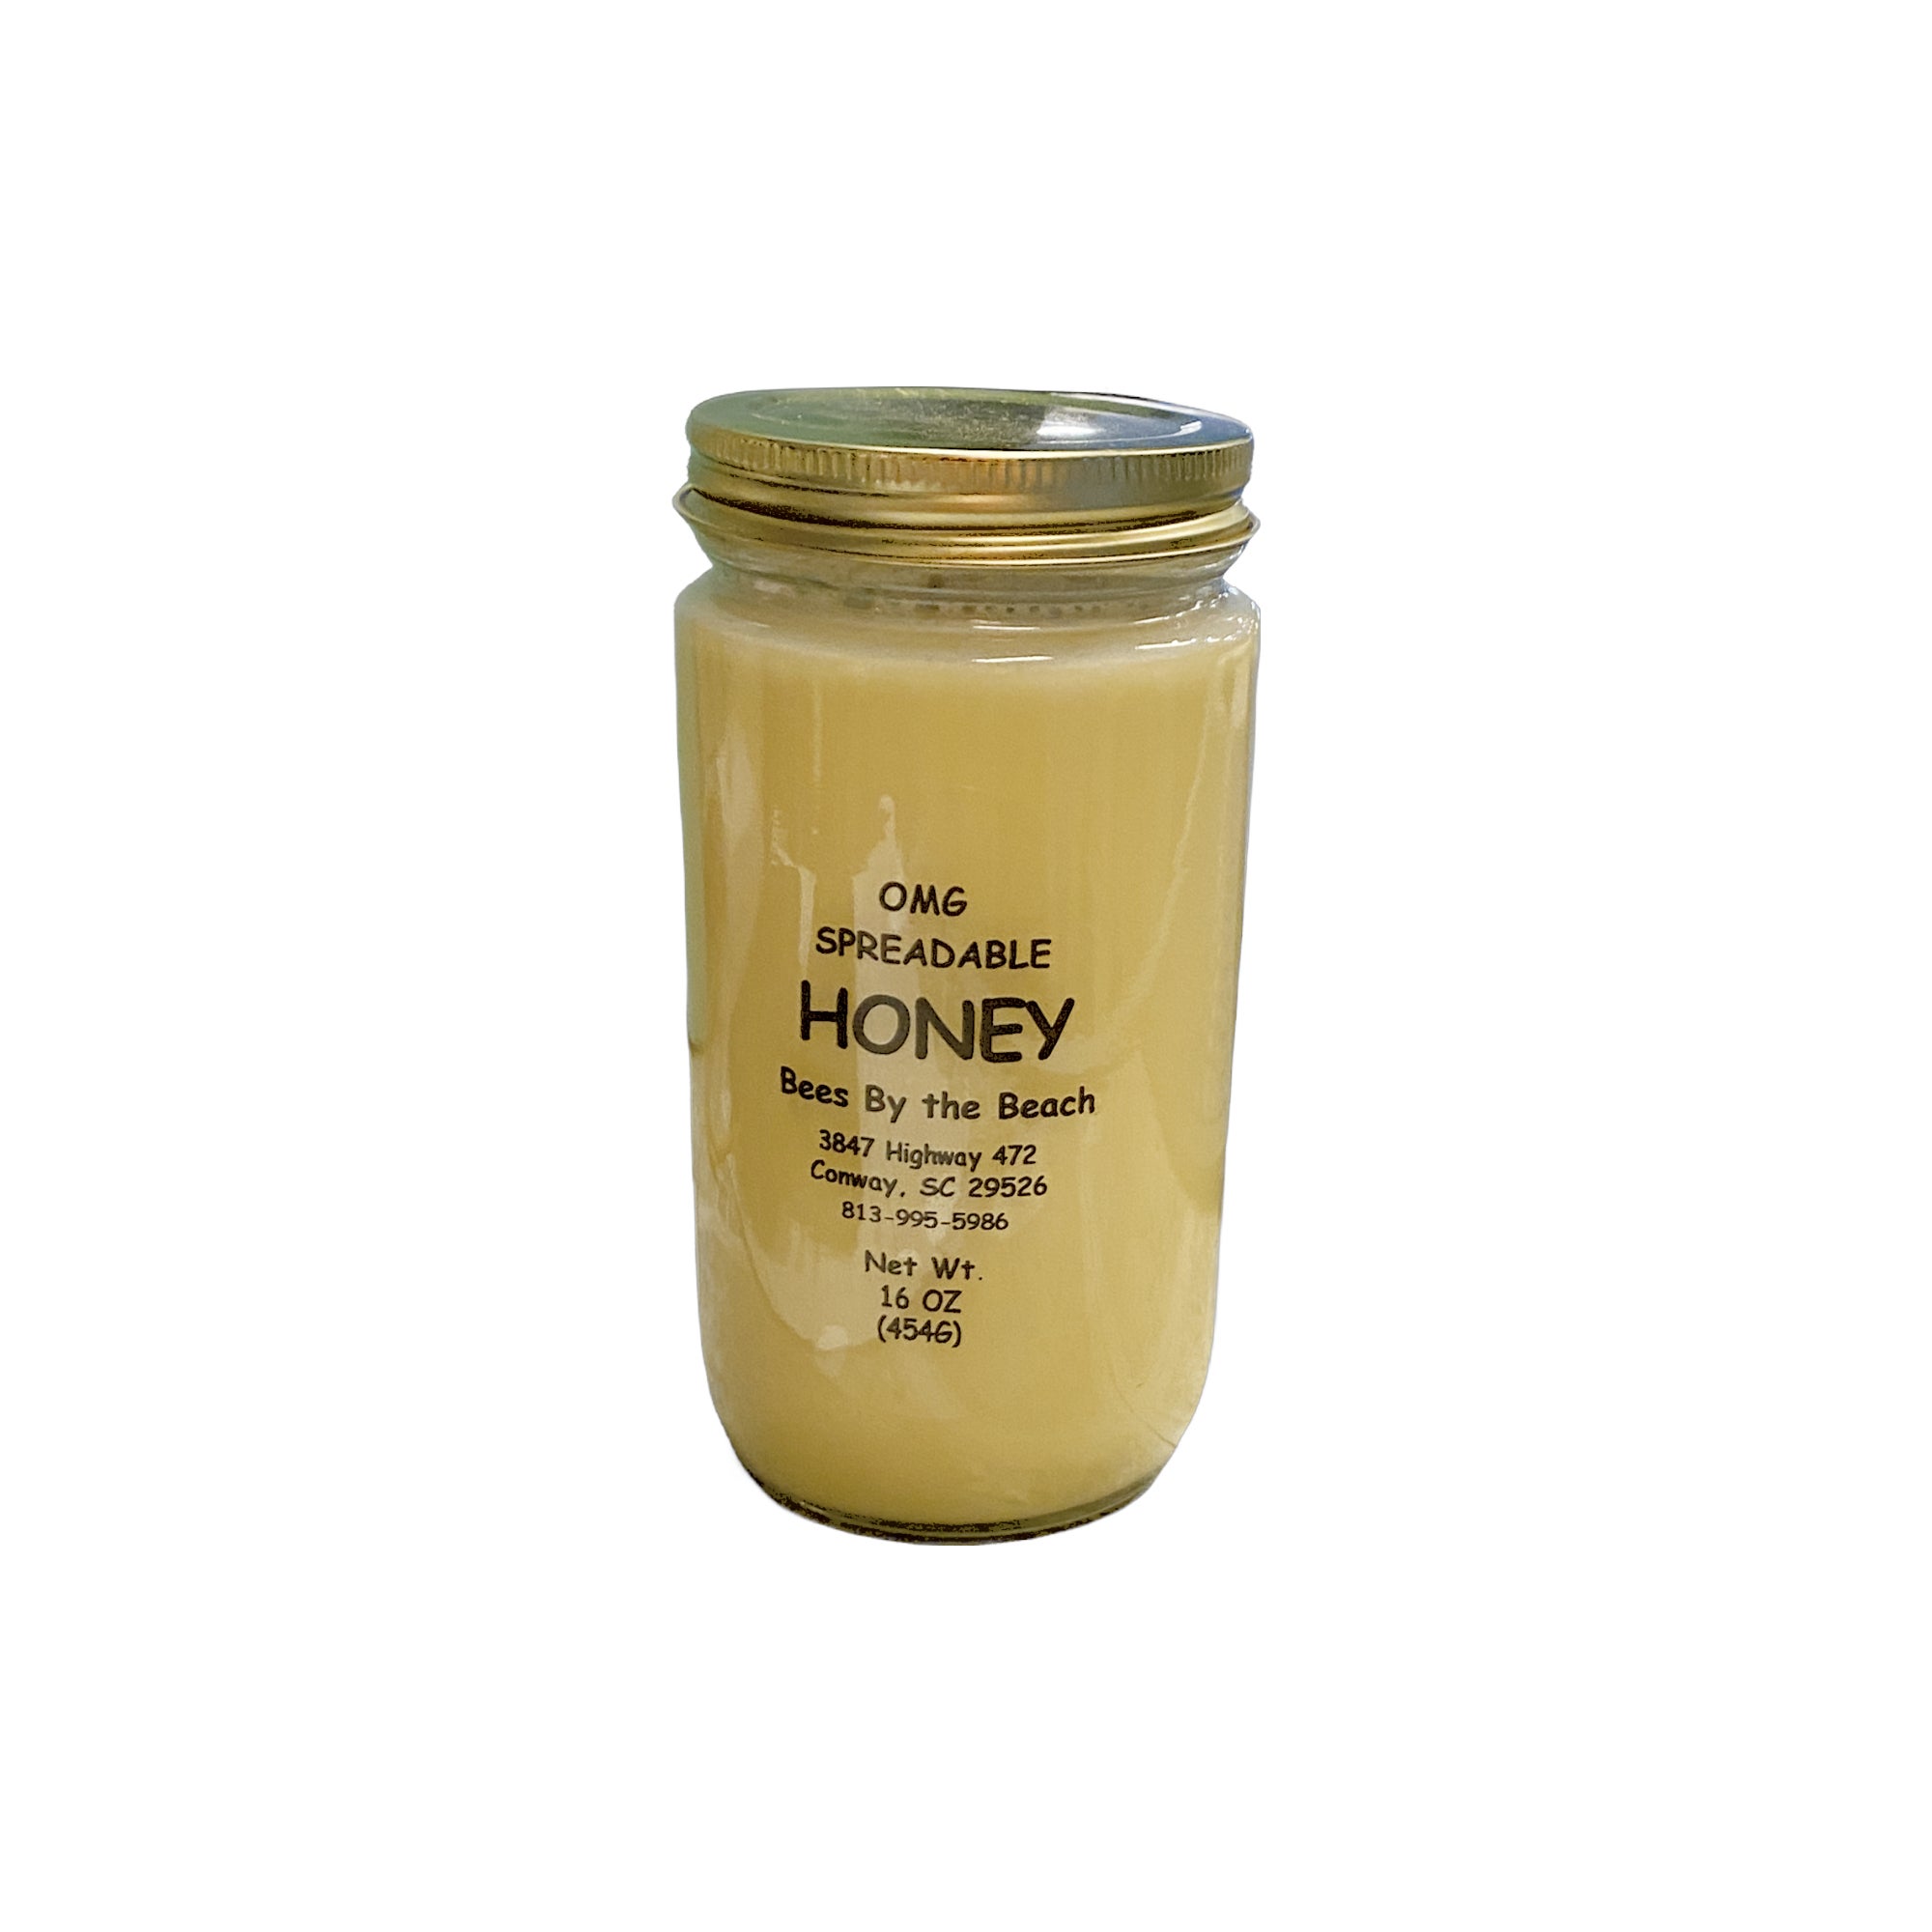 Here's My $322 Honeylove Haul. Read My Honest Review - Topdust